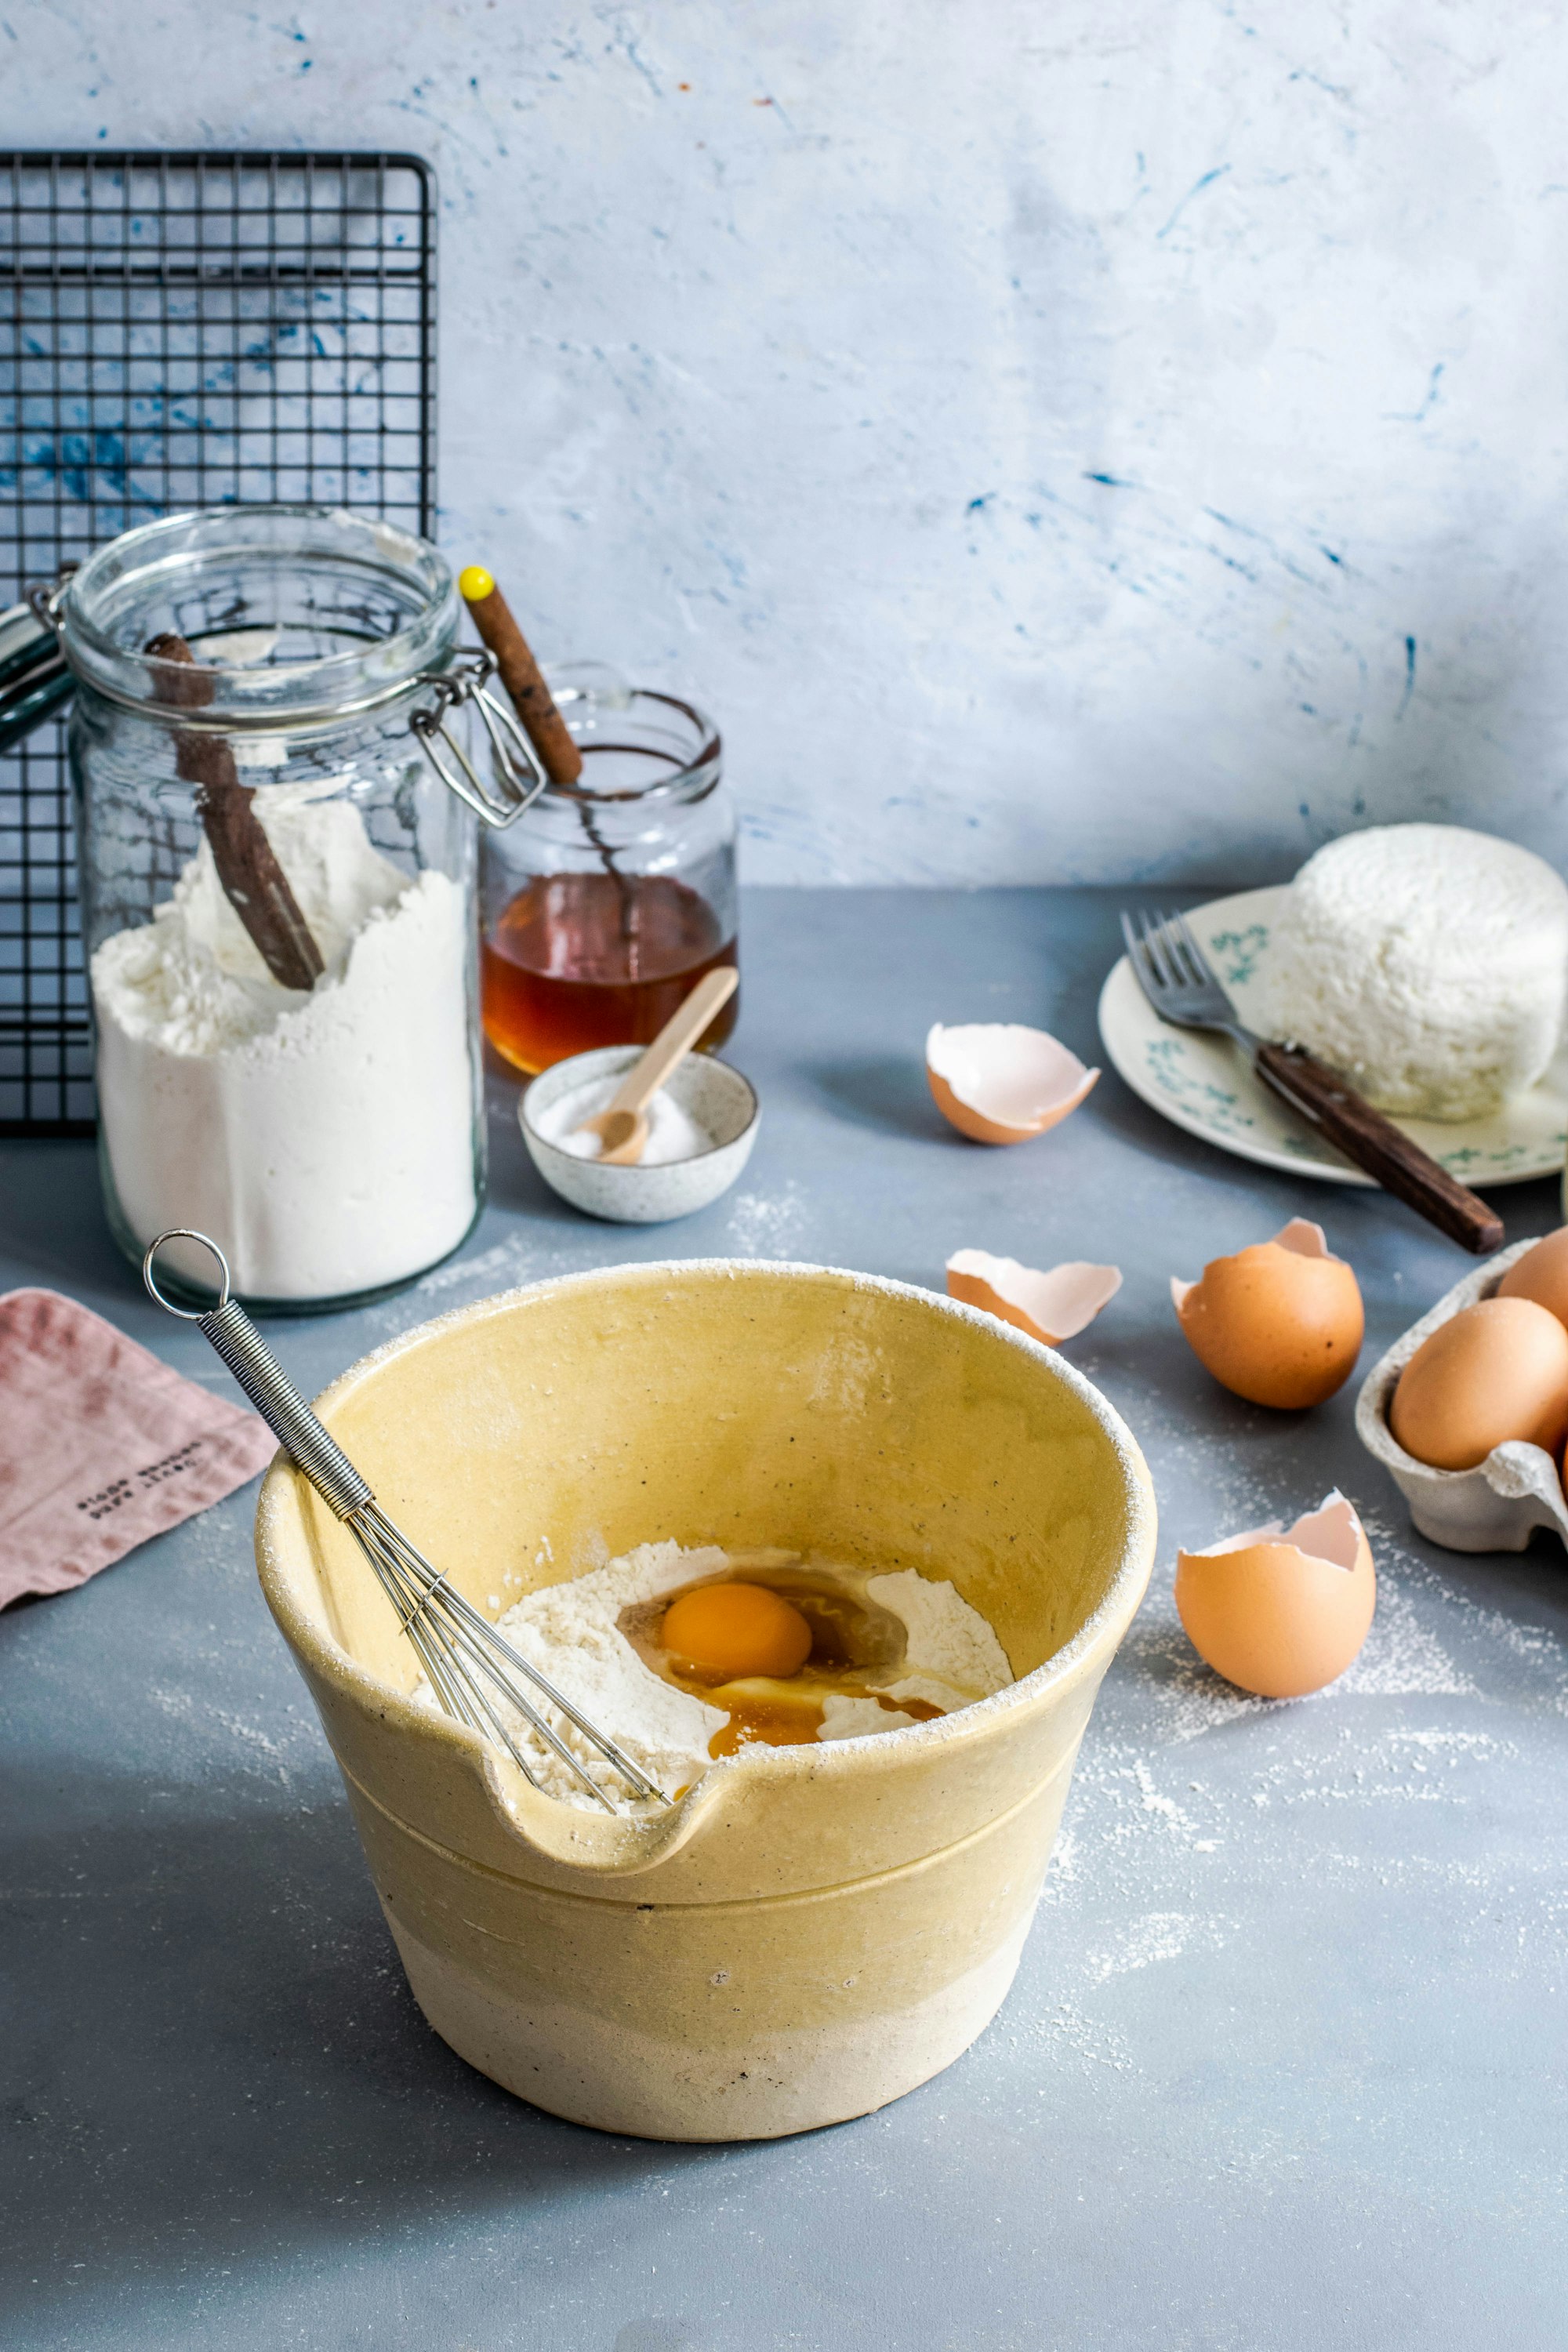 Butter, Tepung, Telur: Kenal Lebih Baik Sama 3 Bahan Baking Ini Yuk!